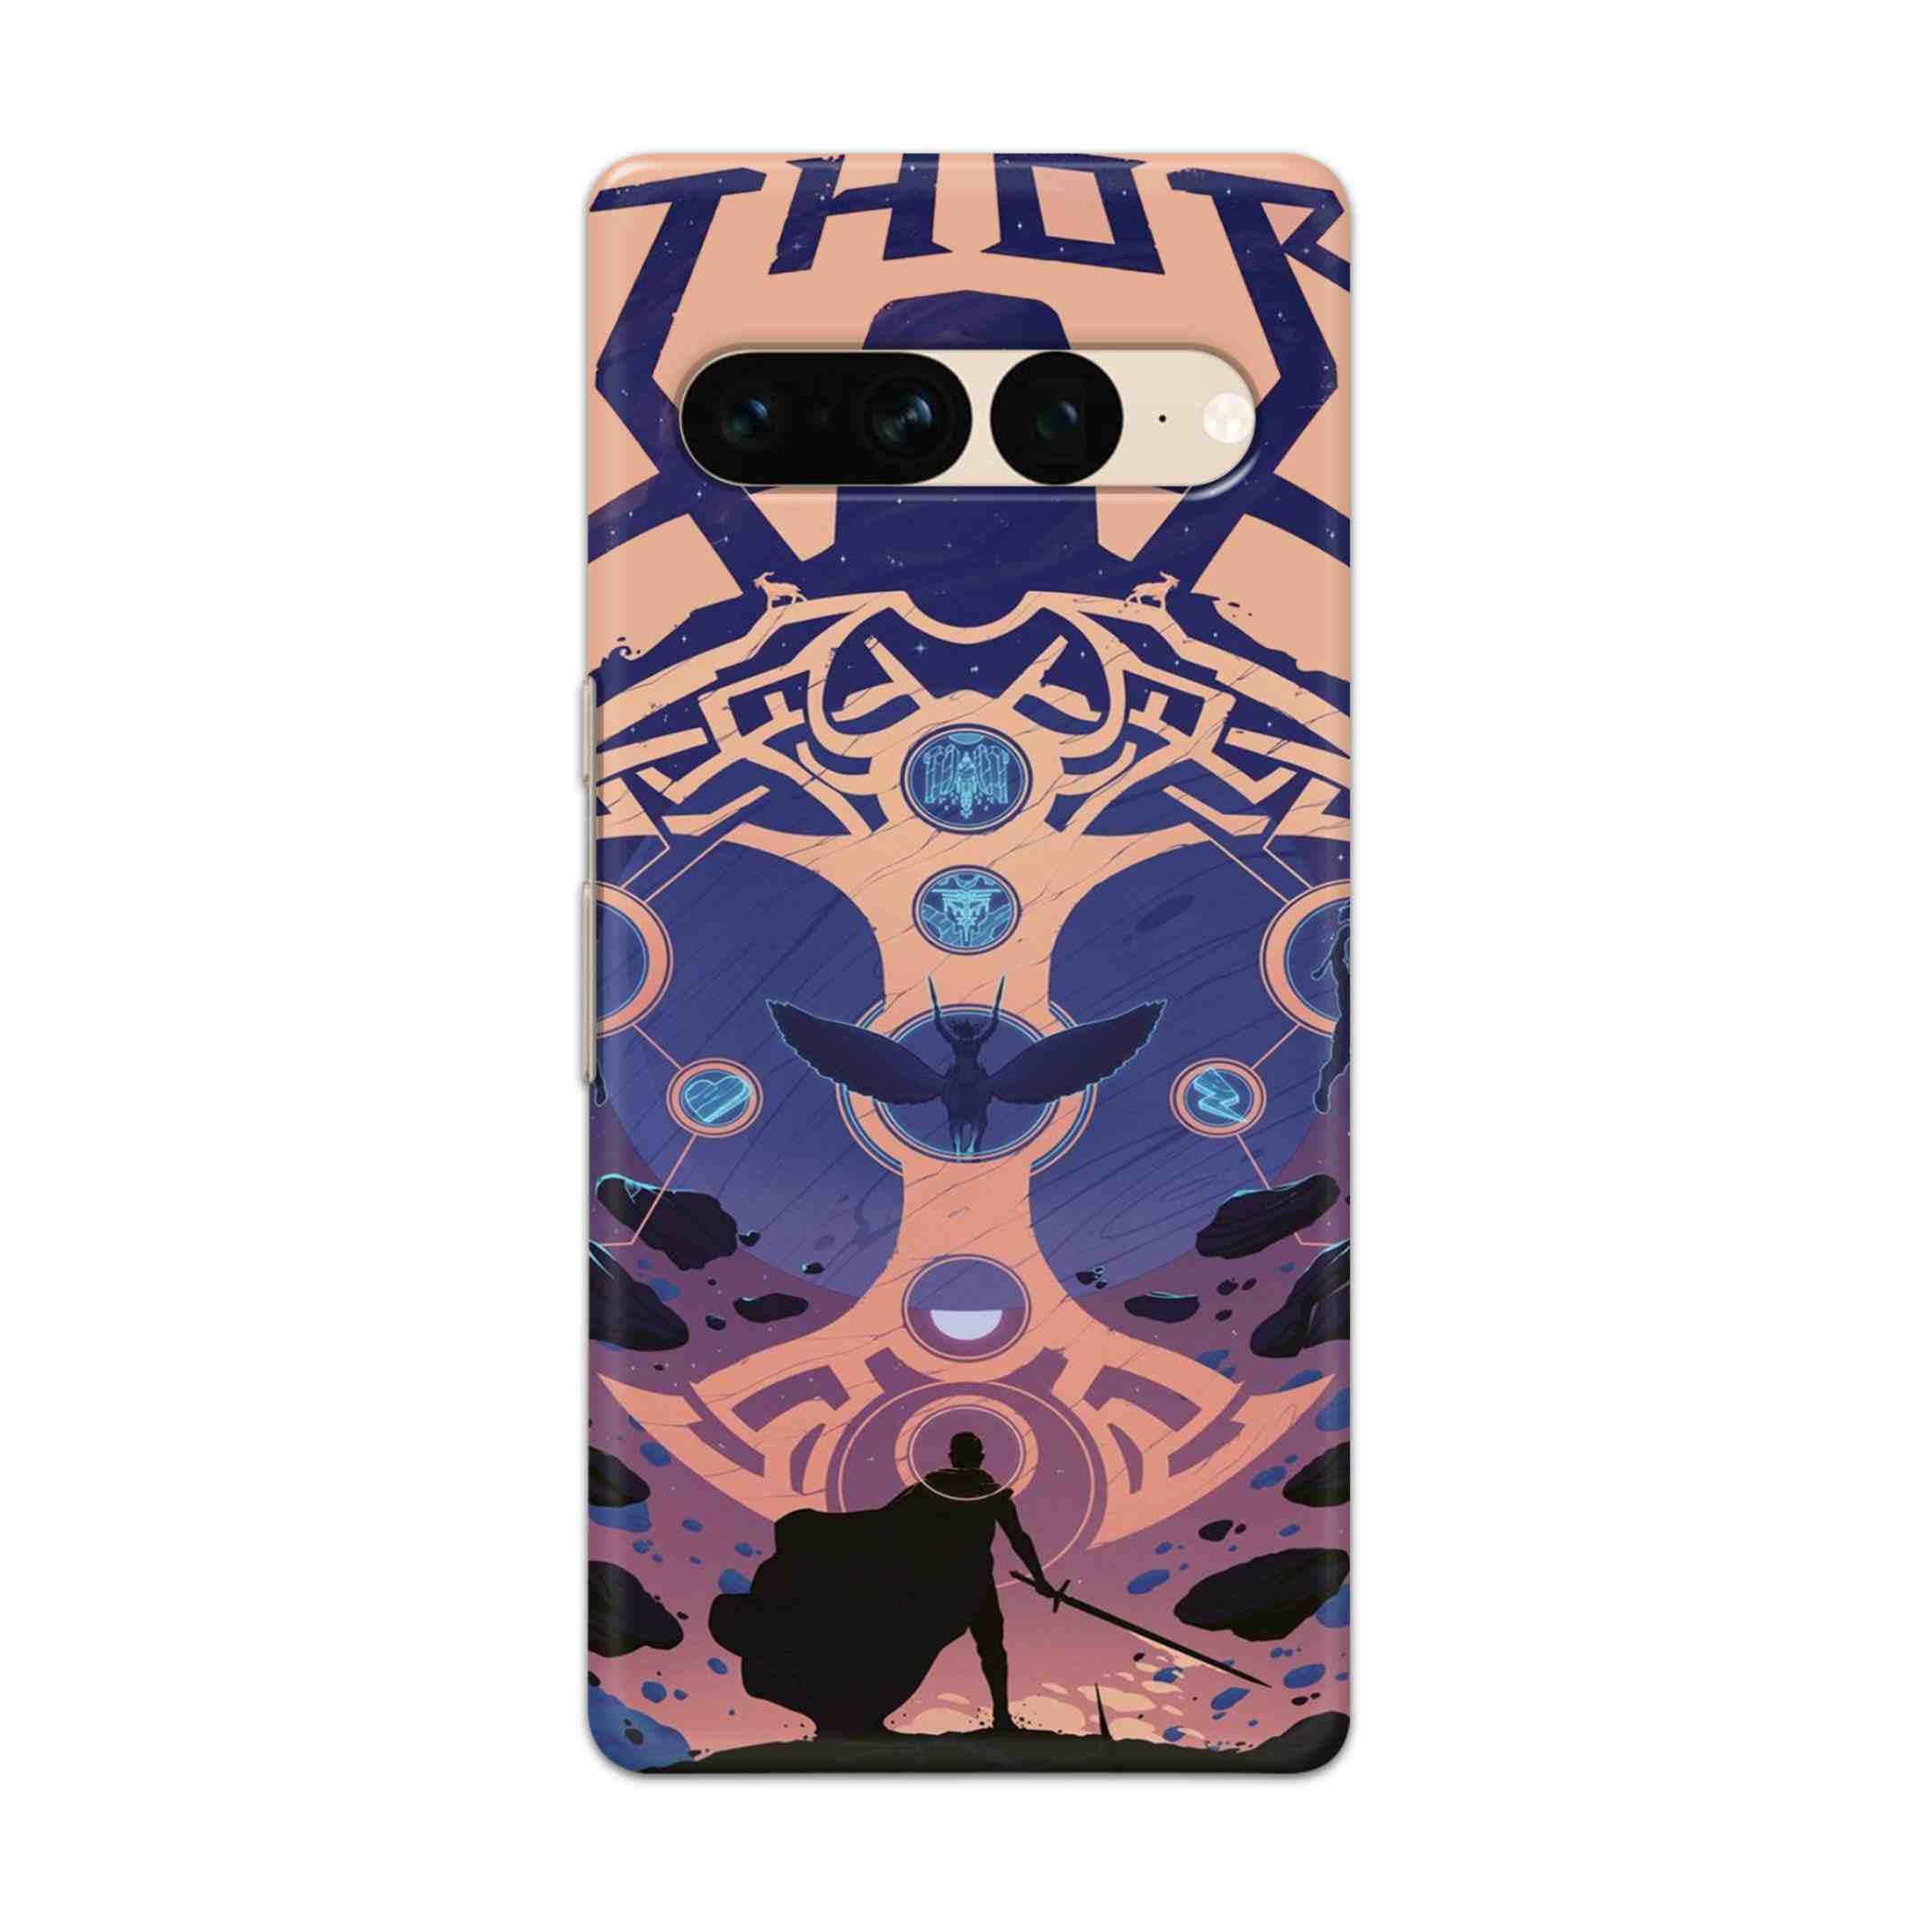 Buy Thor Hard Back Mobile Phone Case Cover For Google Pixel 7 Pro Online